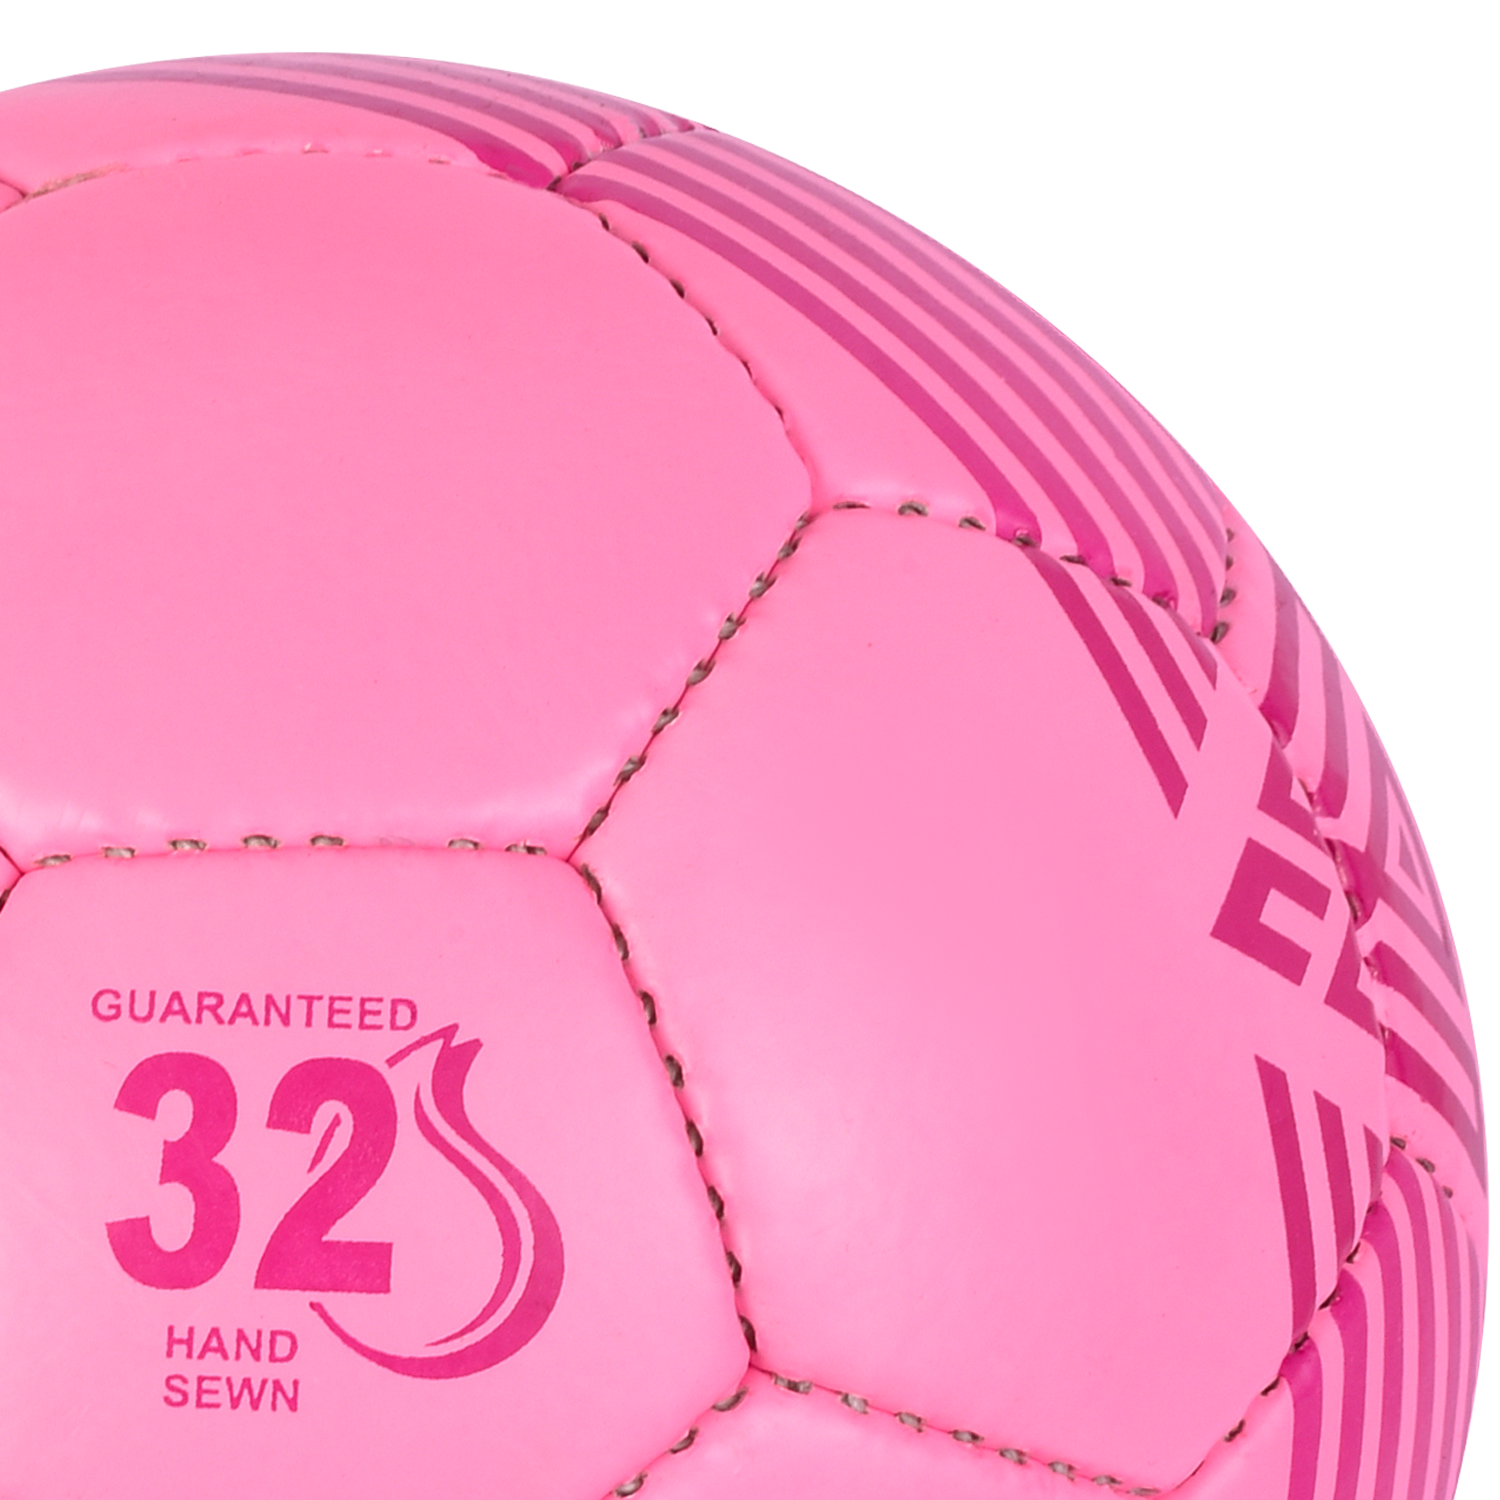 Pink Soccer Ball - WYOX SPORTS